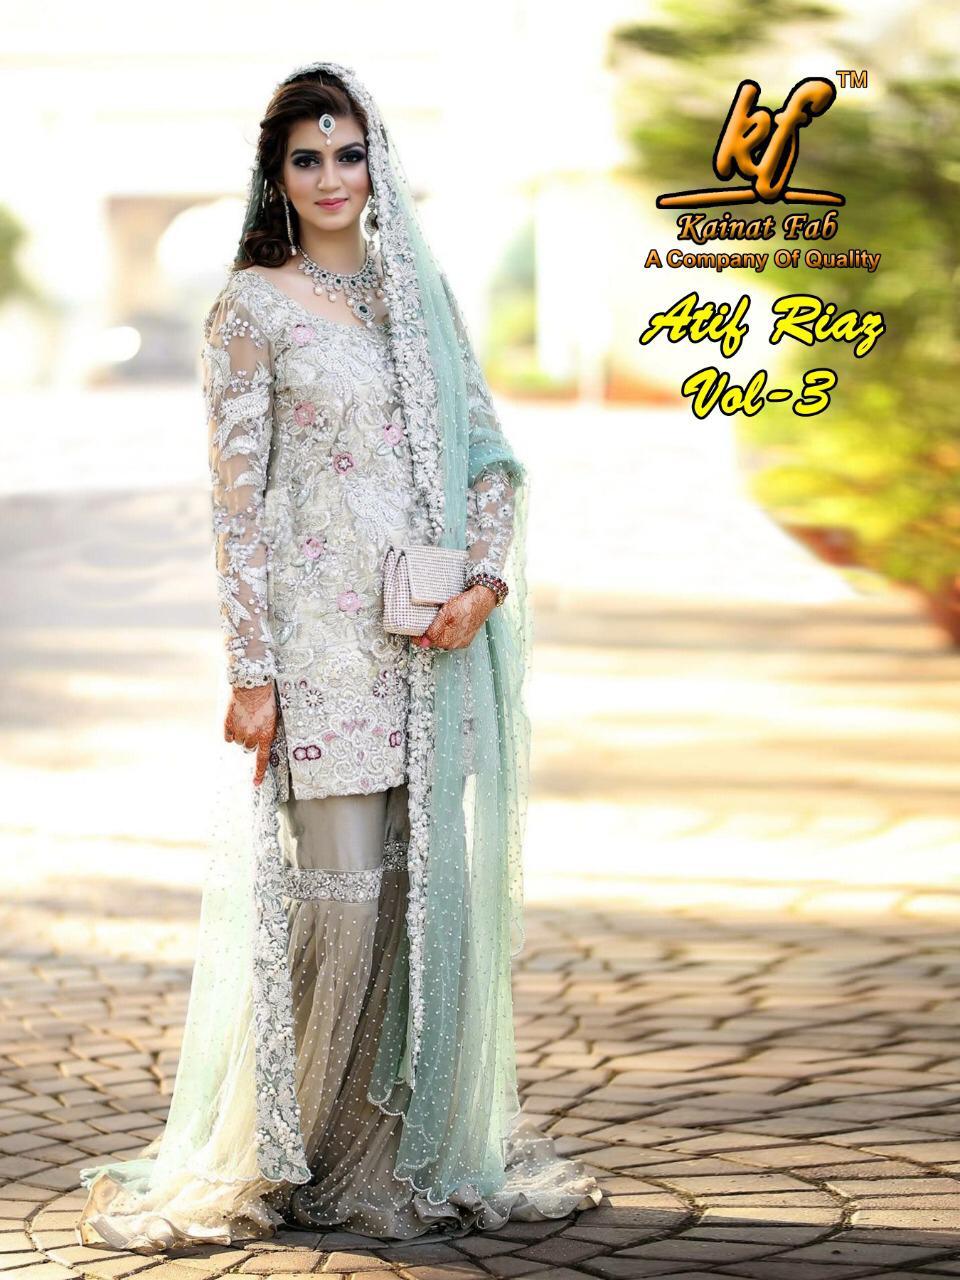 Kainat Fab Atif Riaz Vol 3 Designer Bridal Wear pakistani Suit Latest Catalog in Wholesale